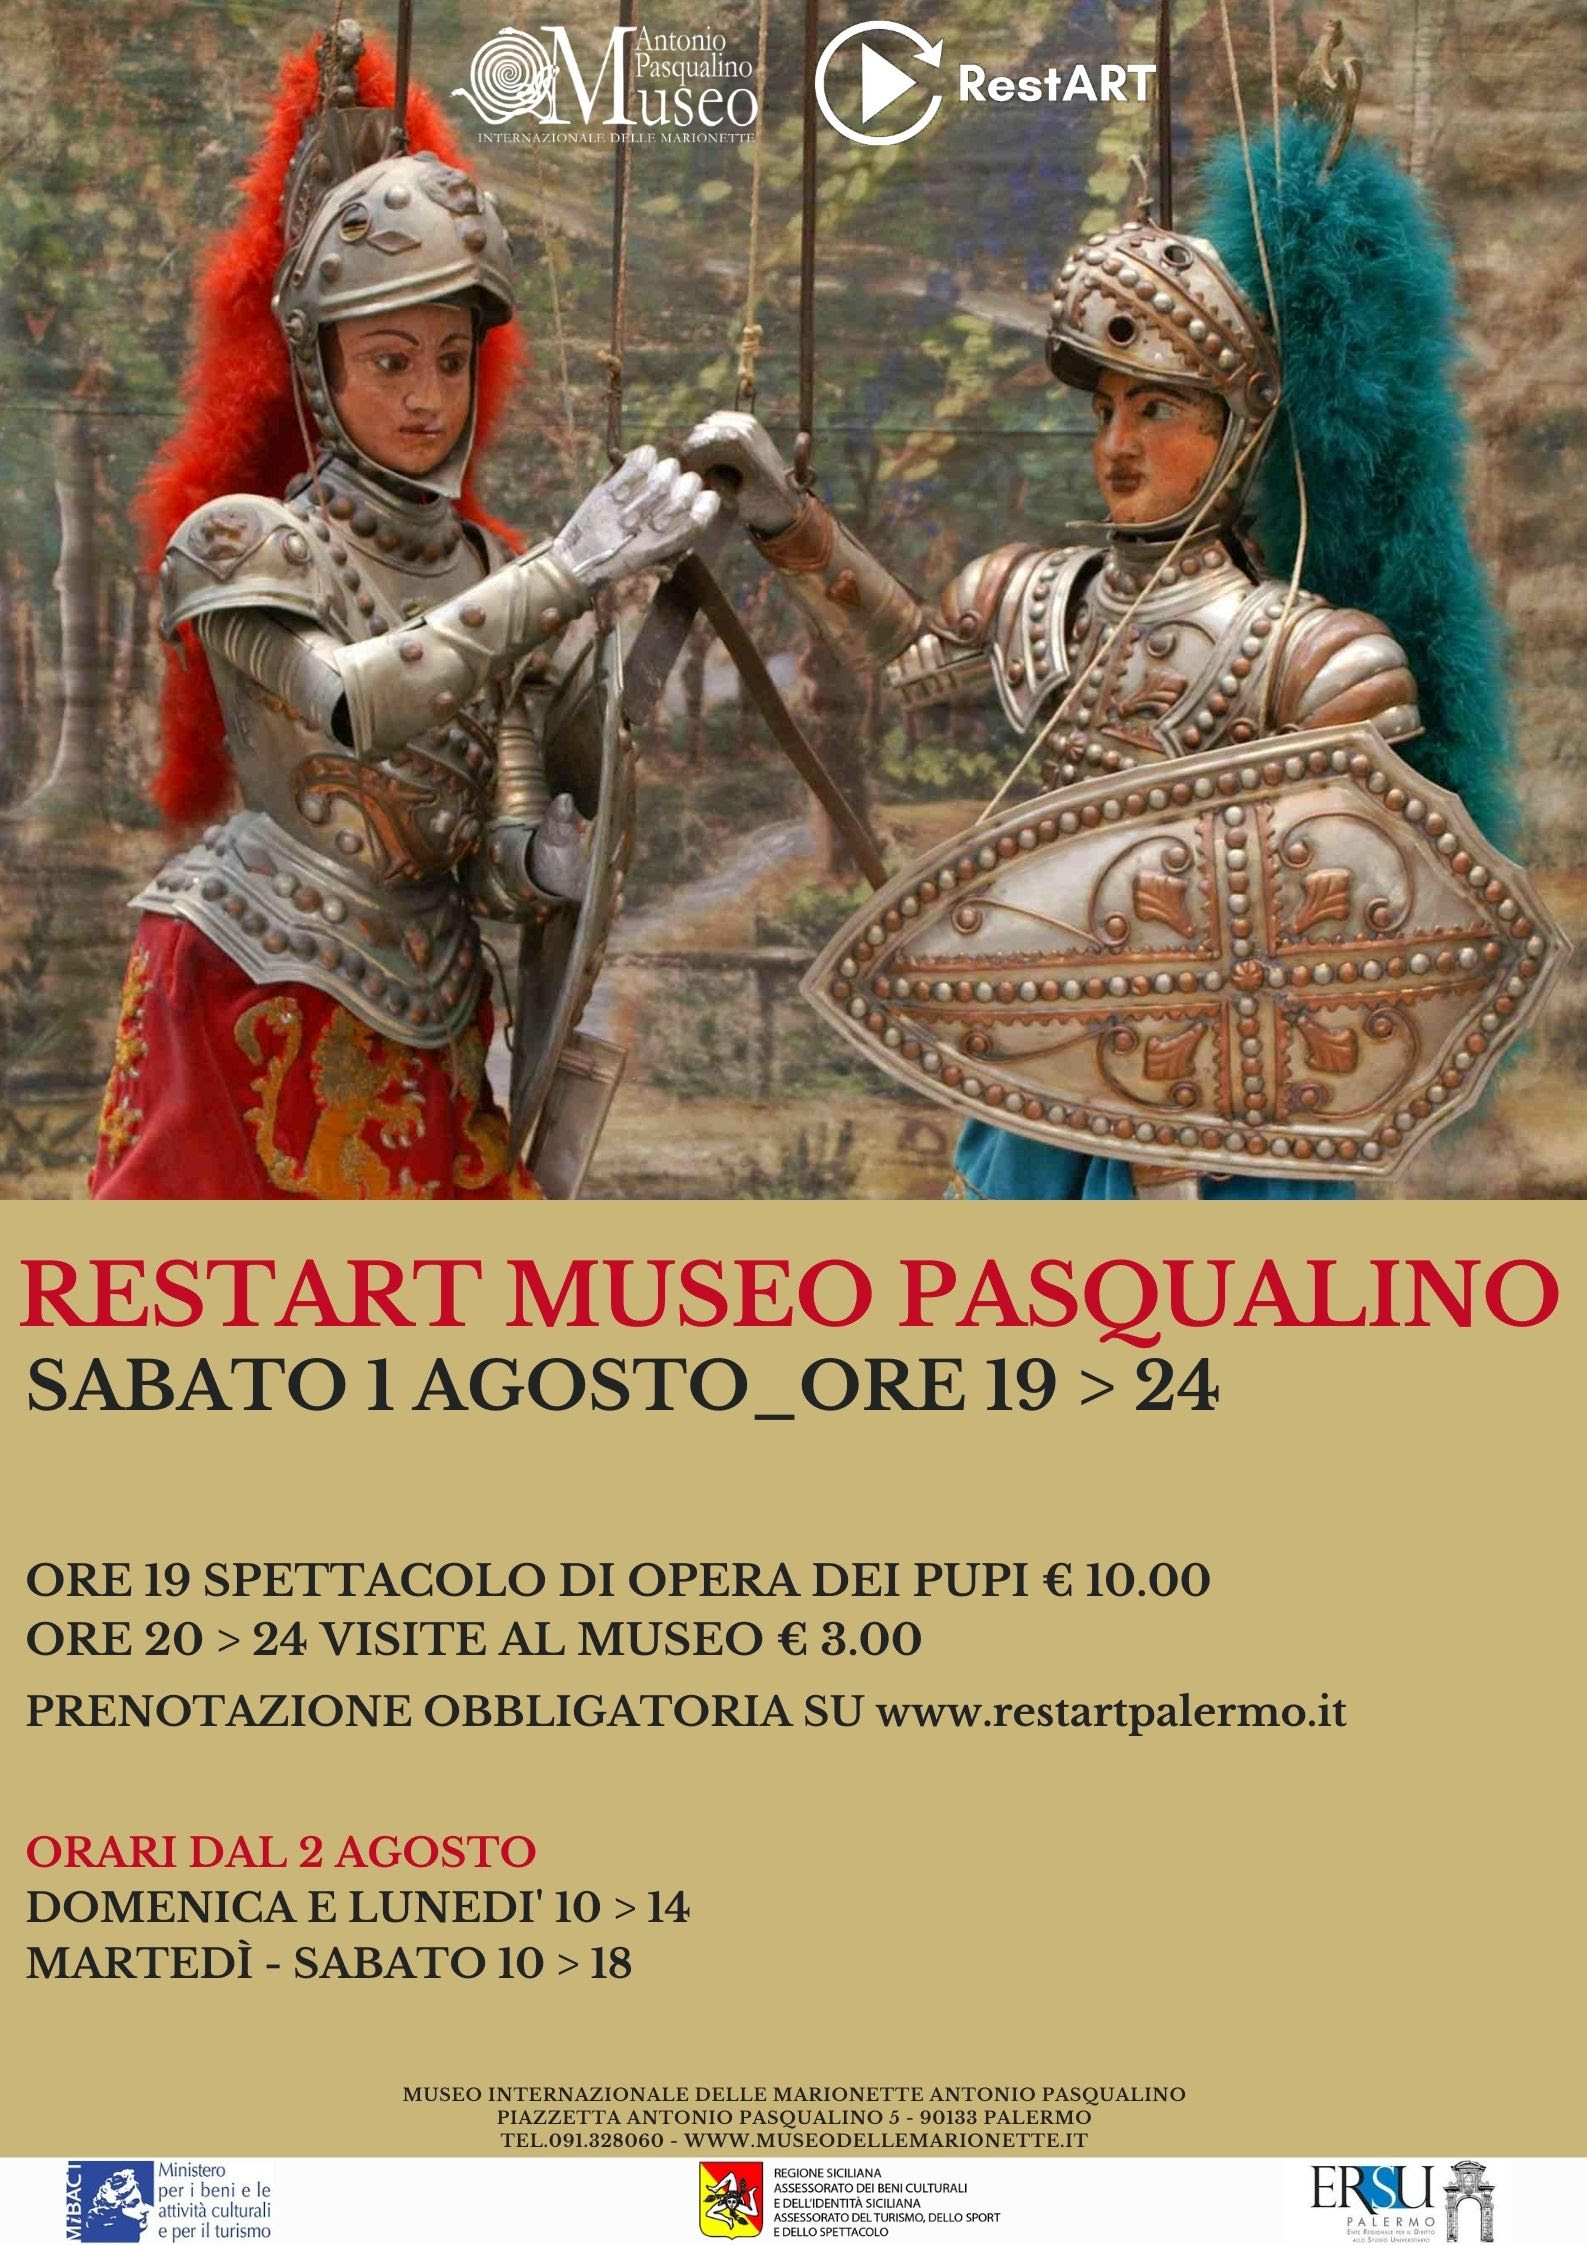 2020 RestaArt Museo
Pasqualino